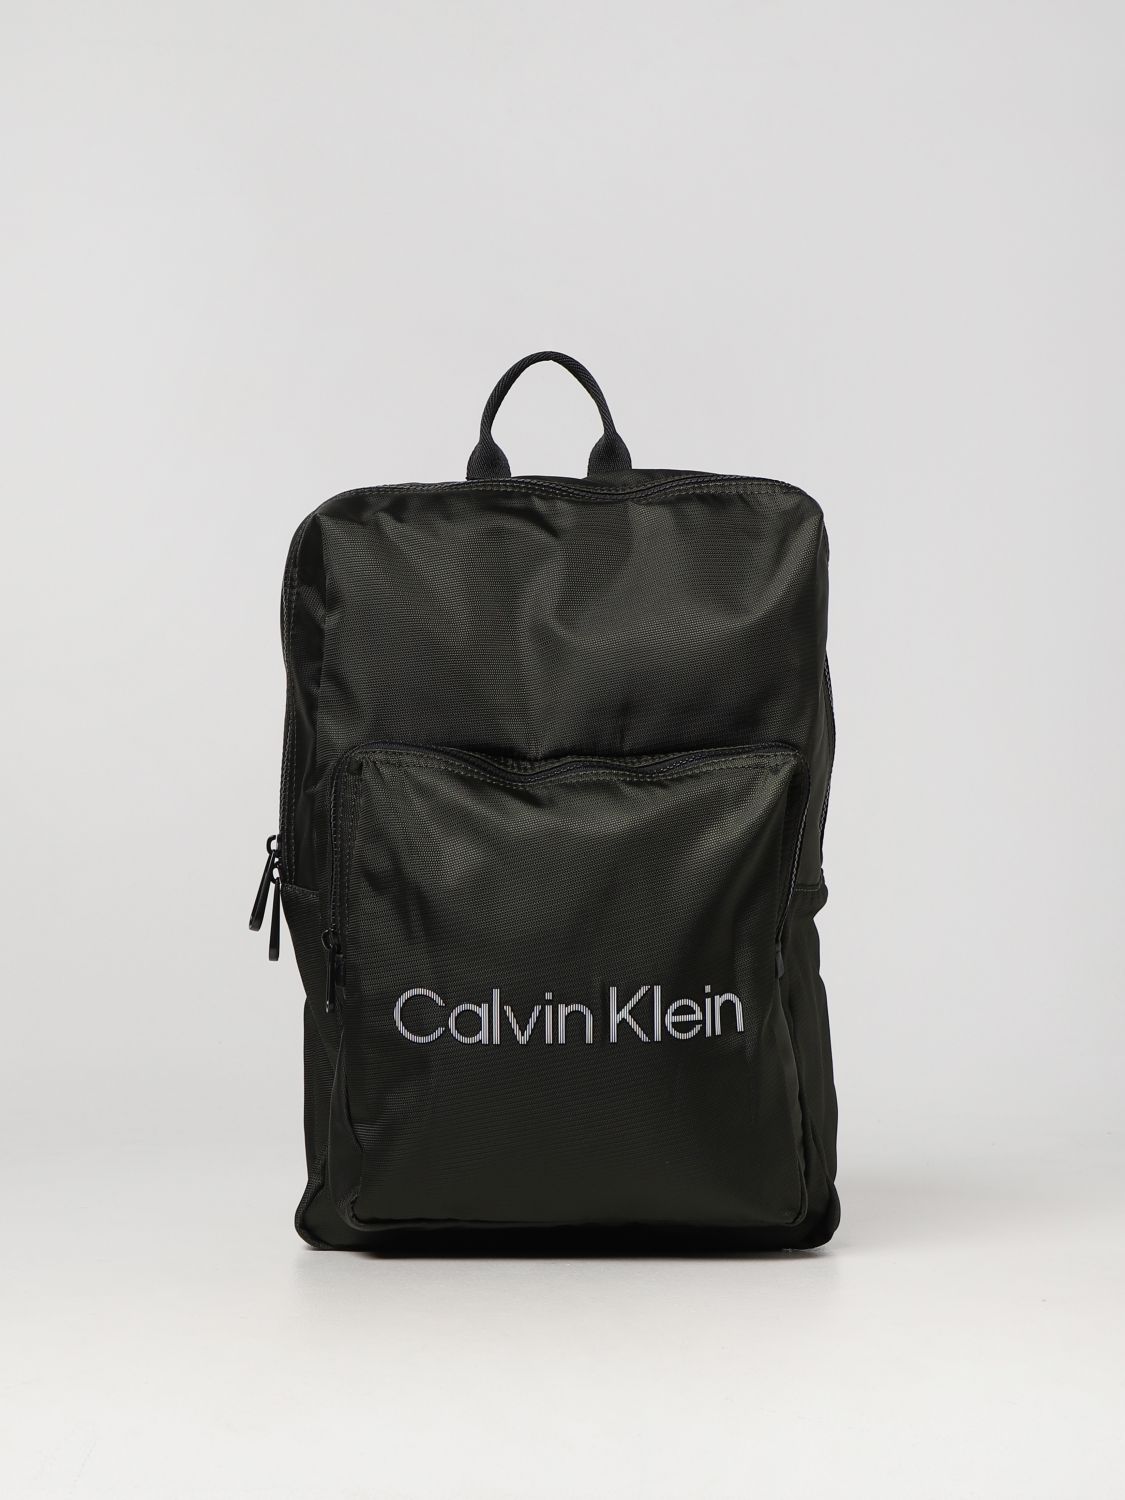 CALVIN KLEIN: backpack for man Olive | Calvin Klein backpack K50K510004 online on GIGLIO.COM